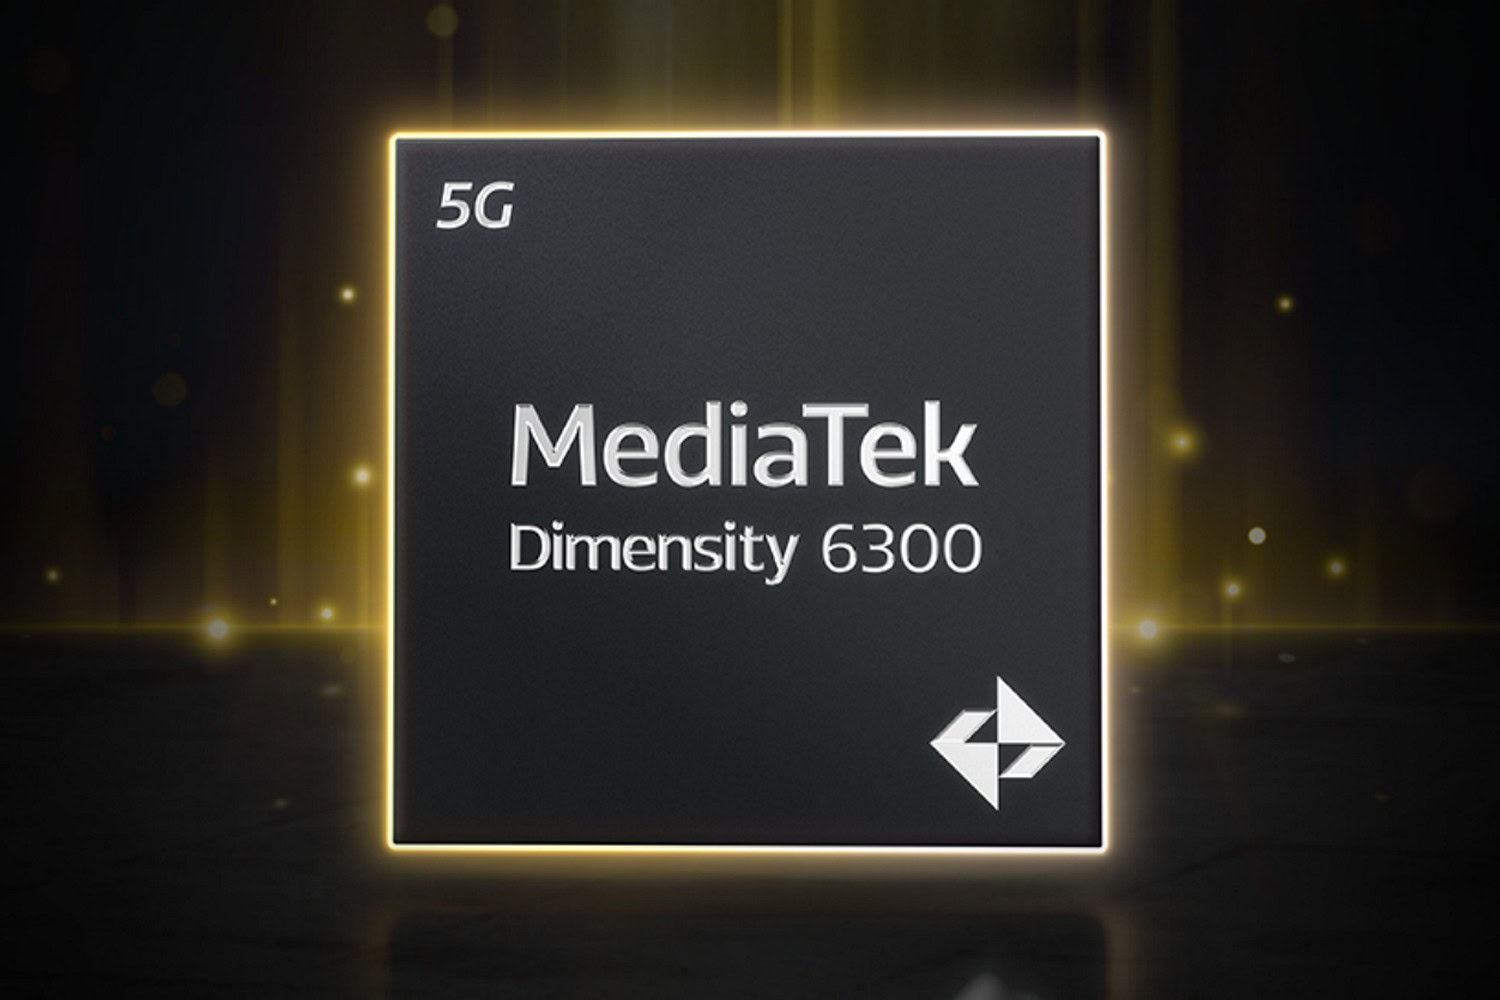 MediaTek Dimensity 6300 Unveiled - 10% Boost in Performance Over Predecessor 10